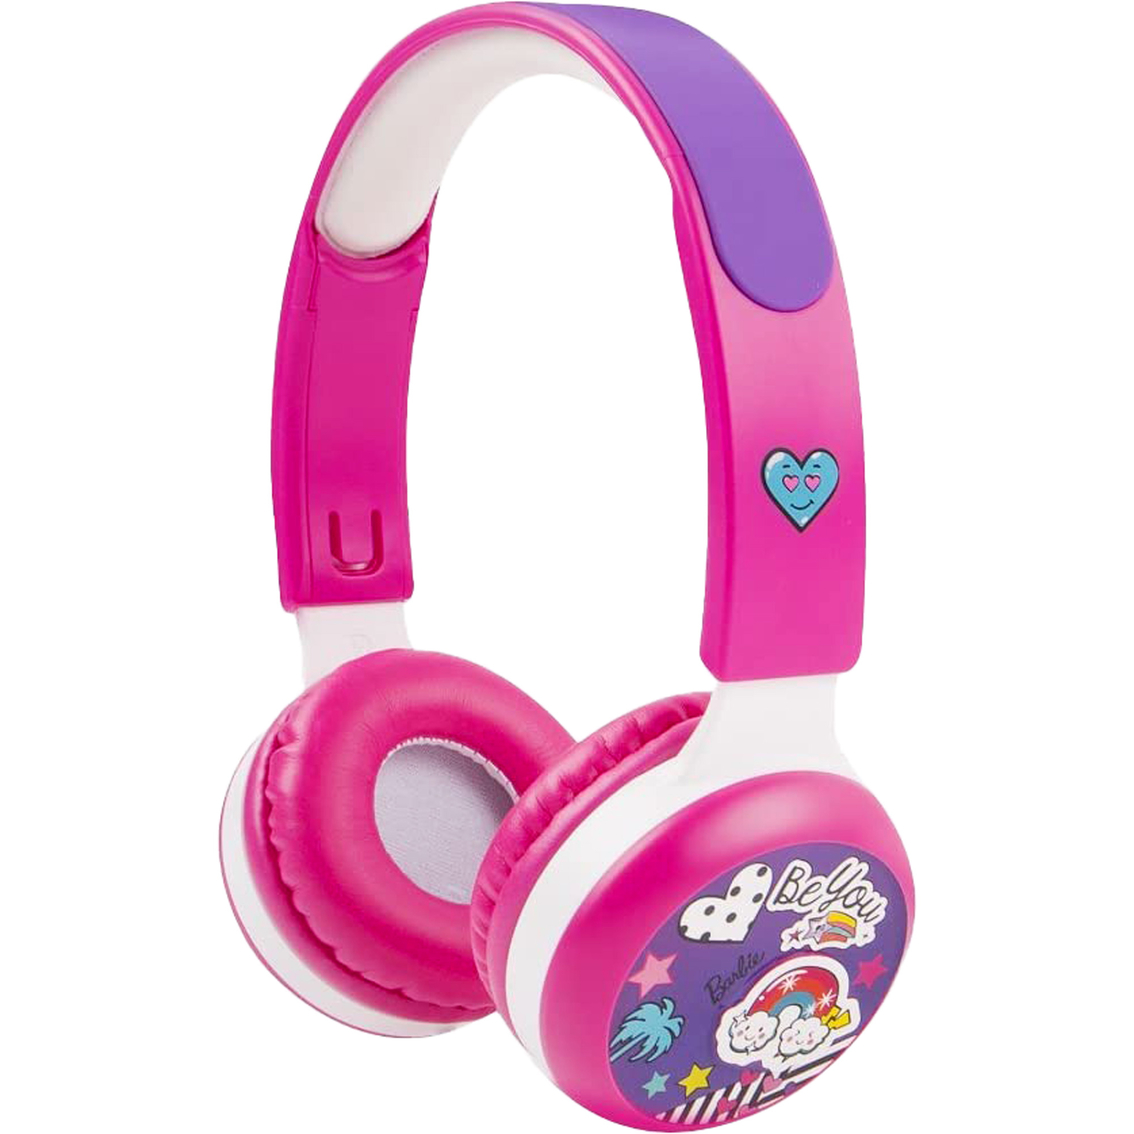 Barbie Live Out Loud Kidsafe Molded Headphones - Image 2 of 7